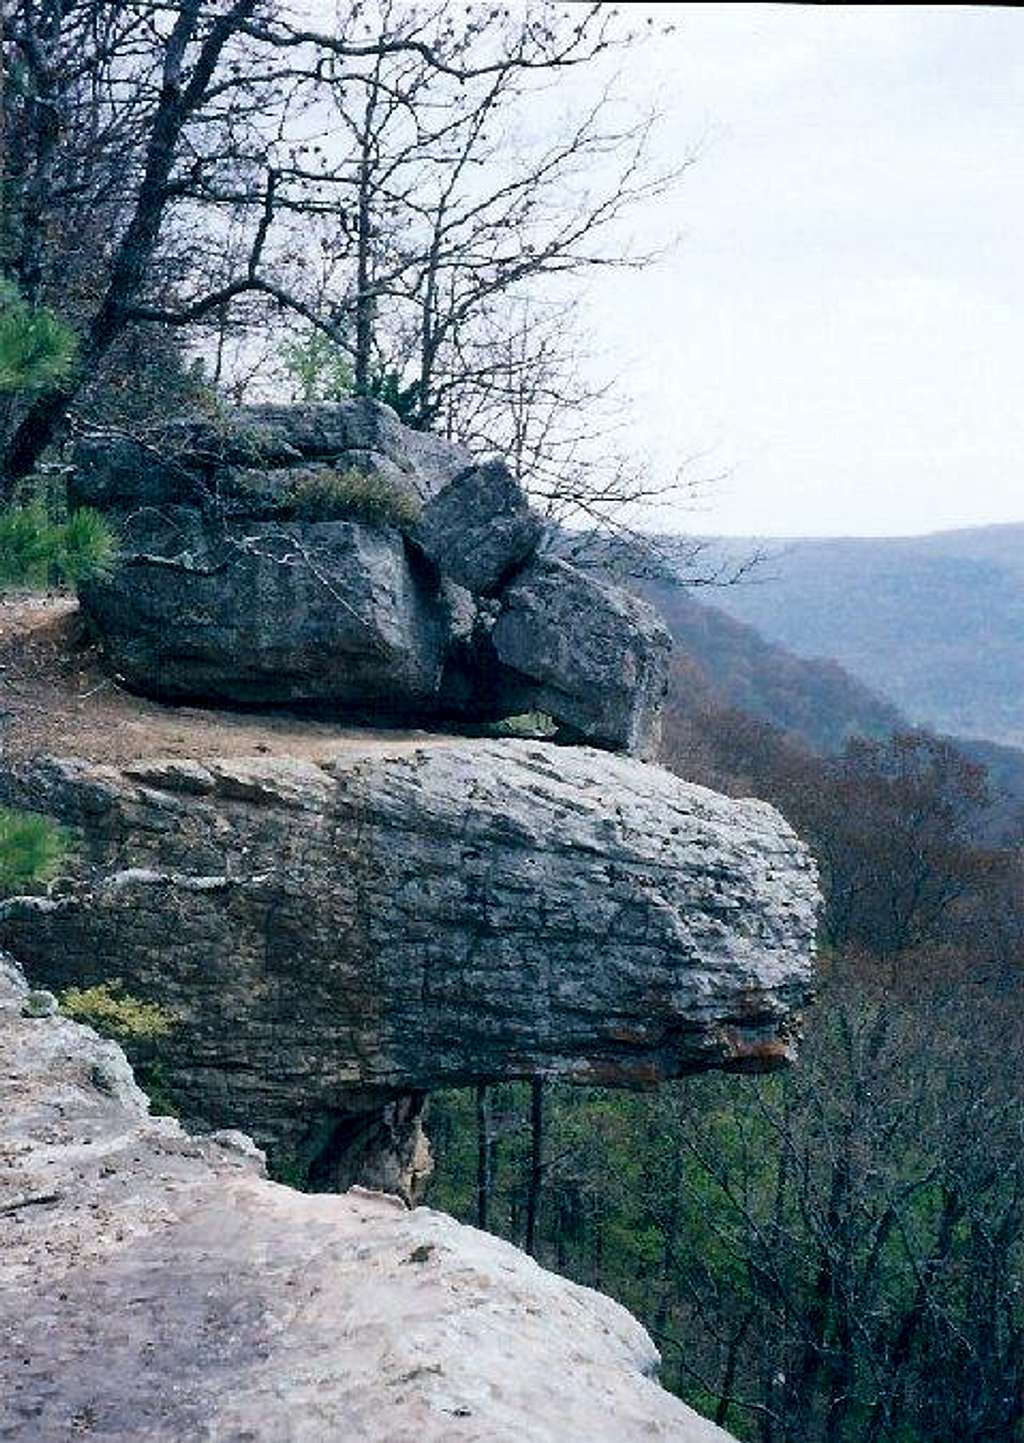 Neighboring crag